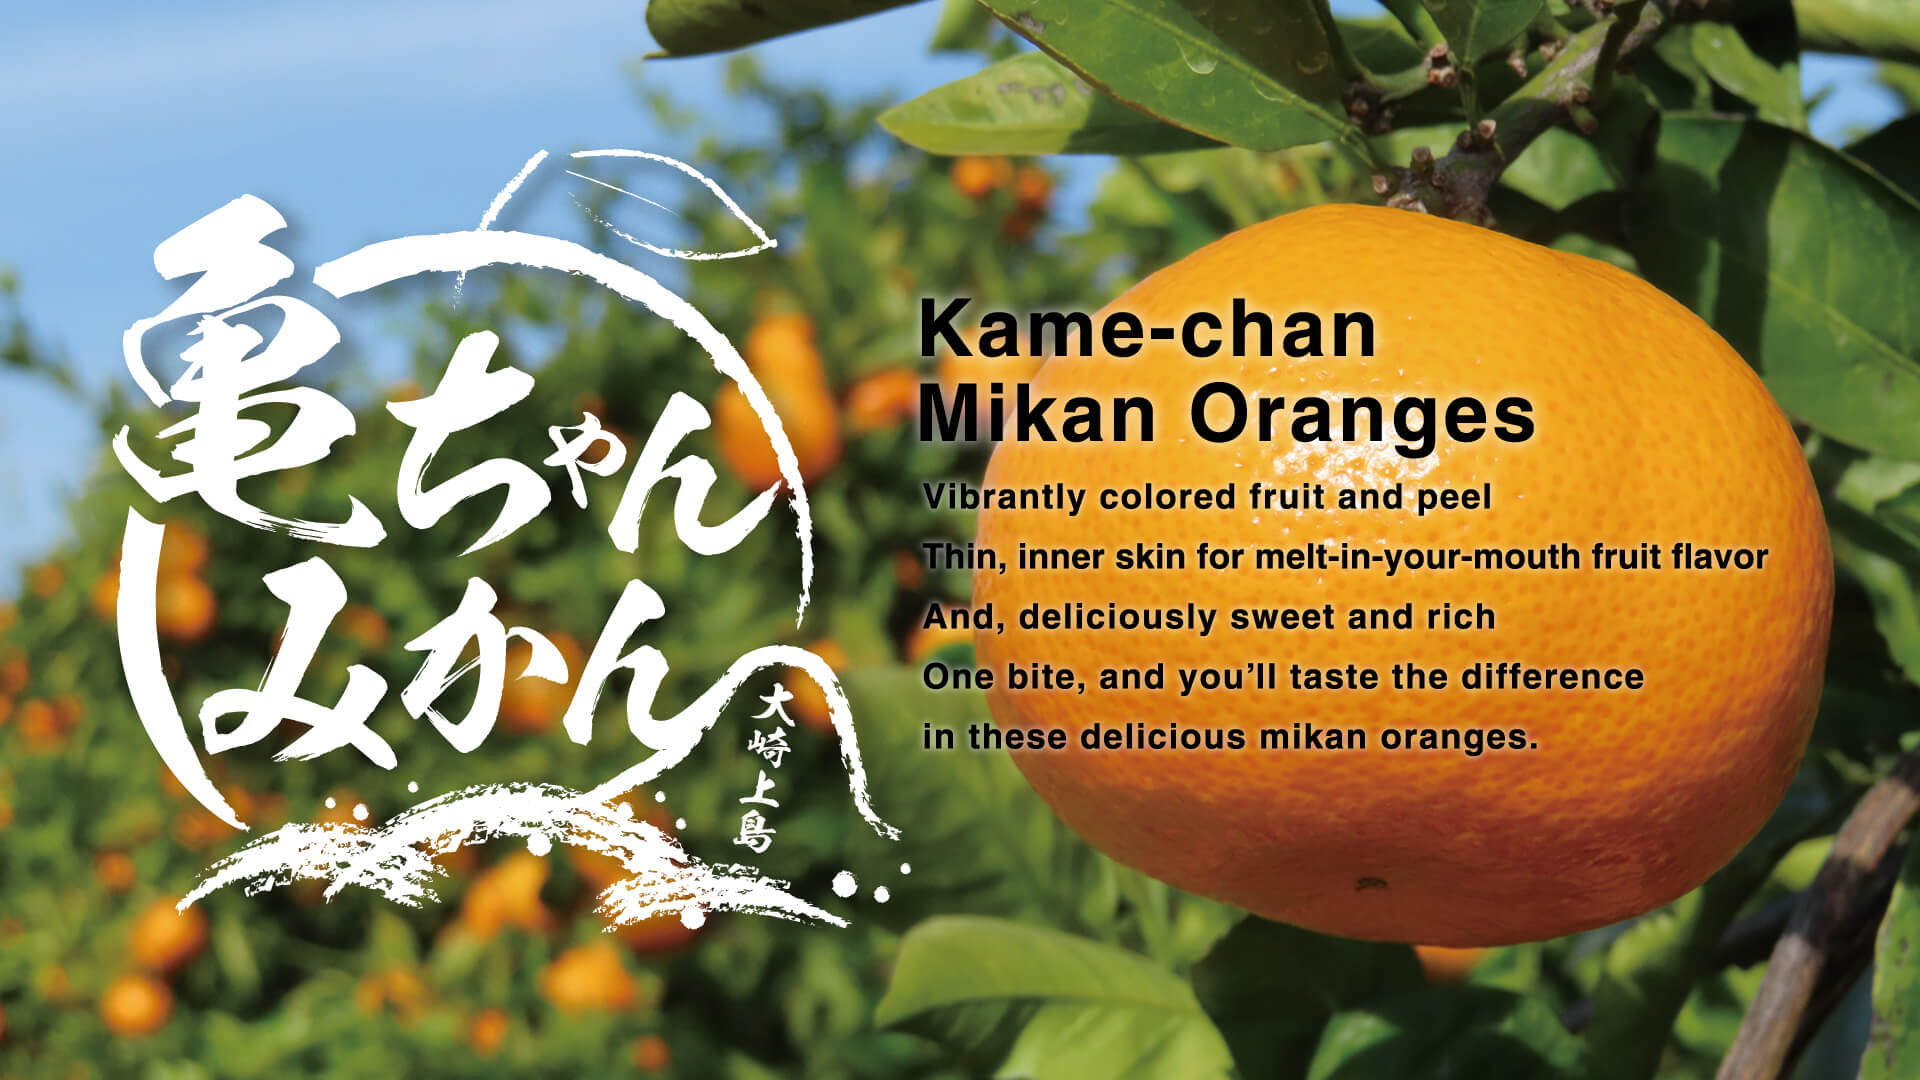 Kame-chan Mikan Oranges